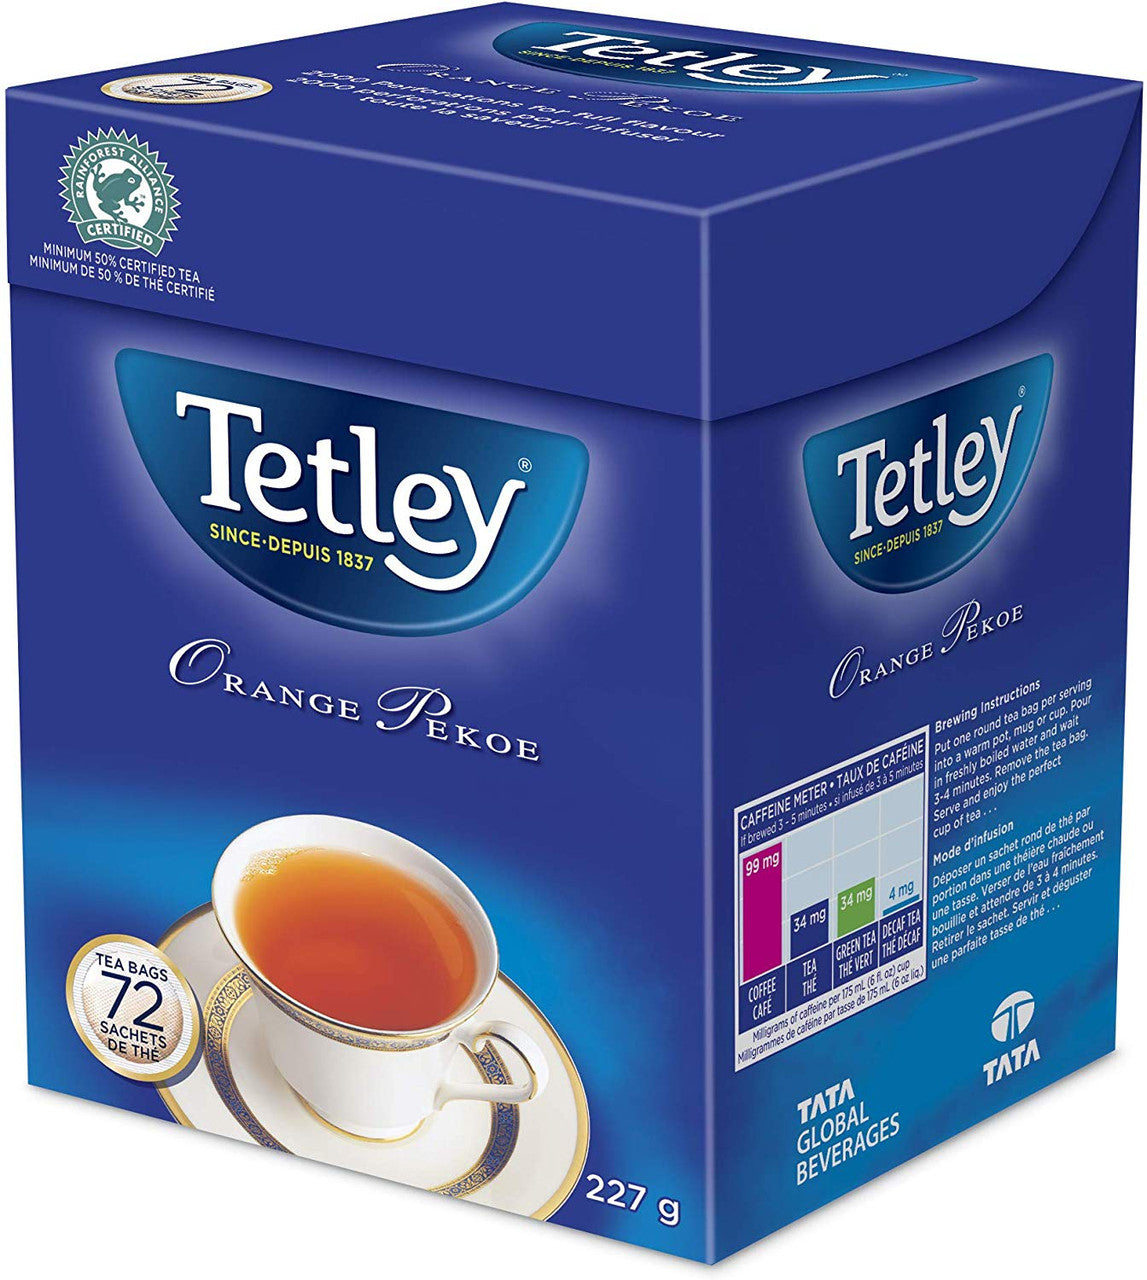 Tetley Orange Pekoe Black Tea - 72 Count, 227g/8 oz., {Imported from Canada}